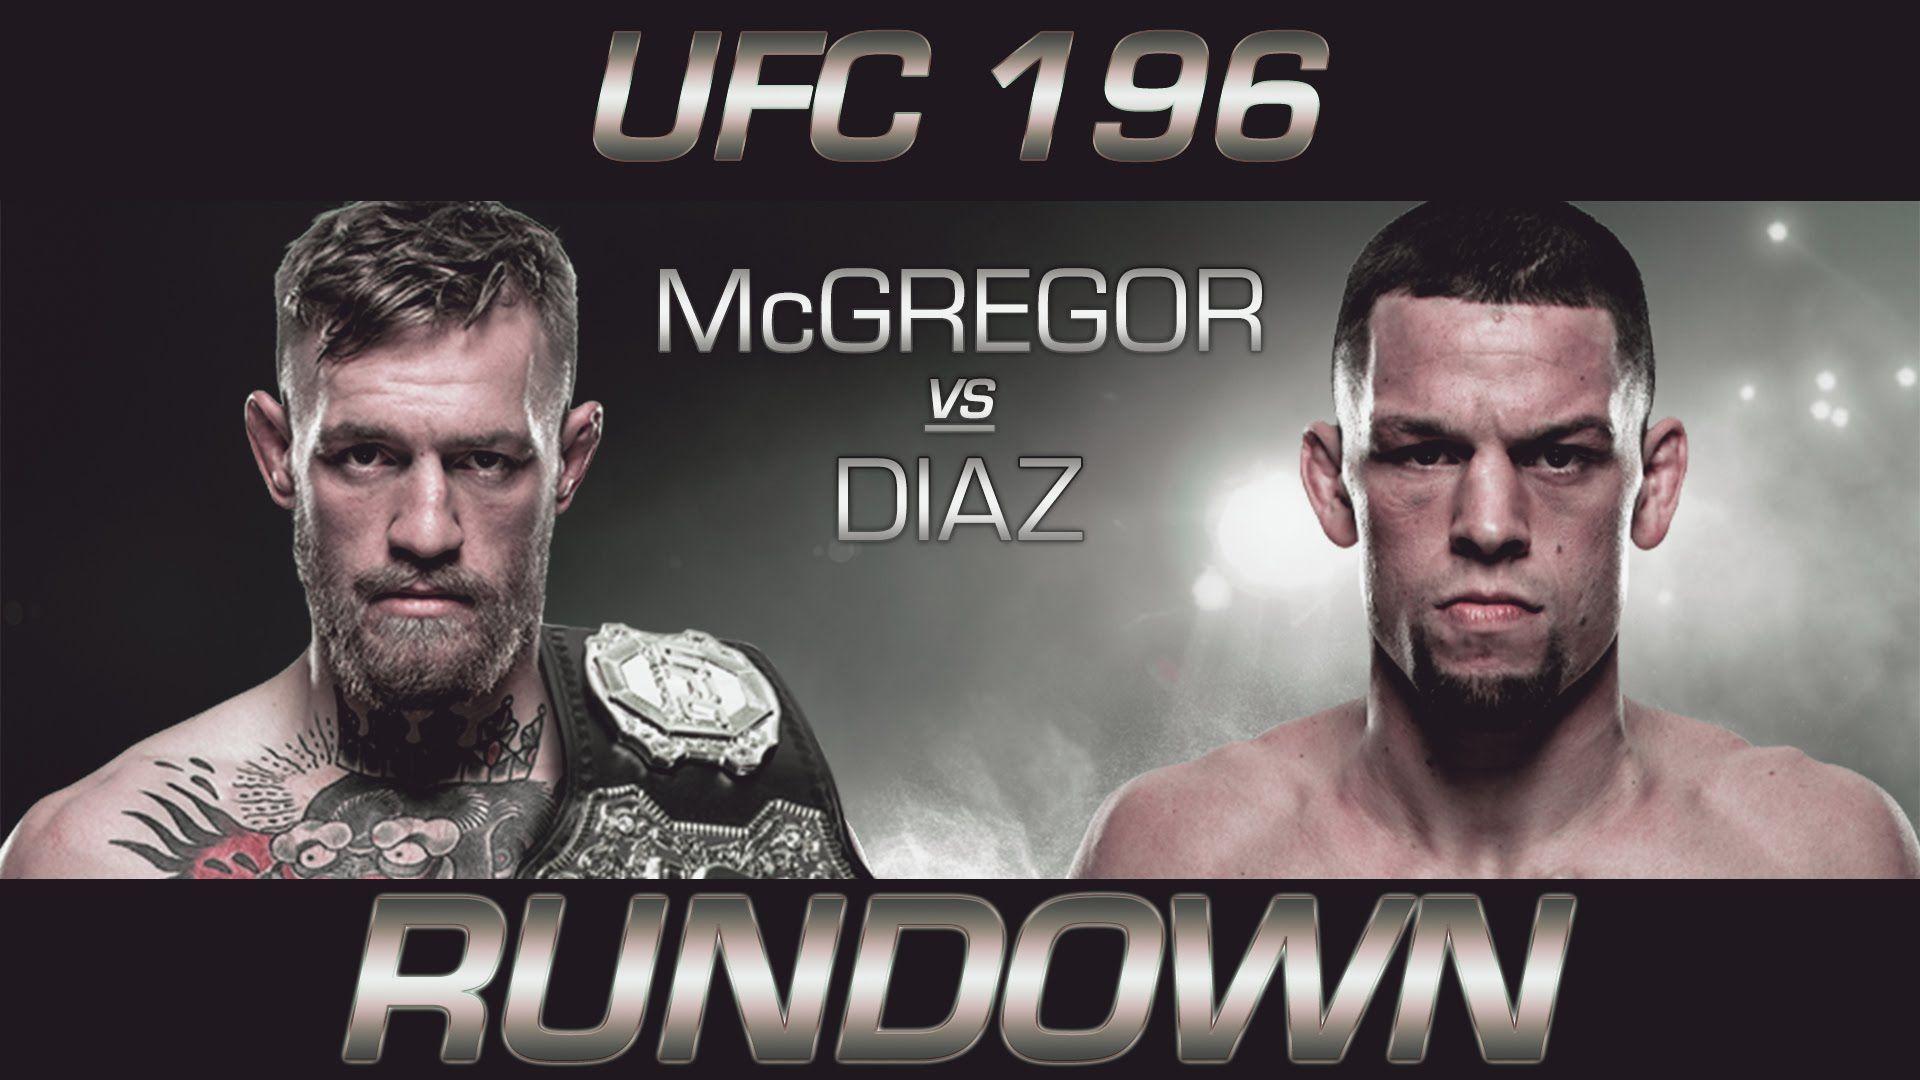 RUNDOWN McGregor vs Nate Diaz #UFC196